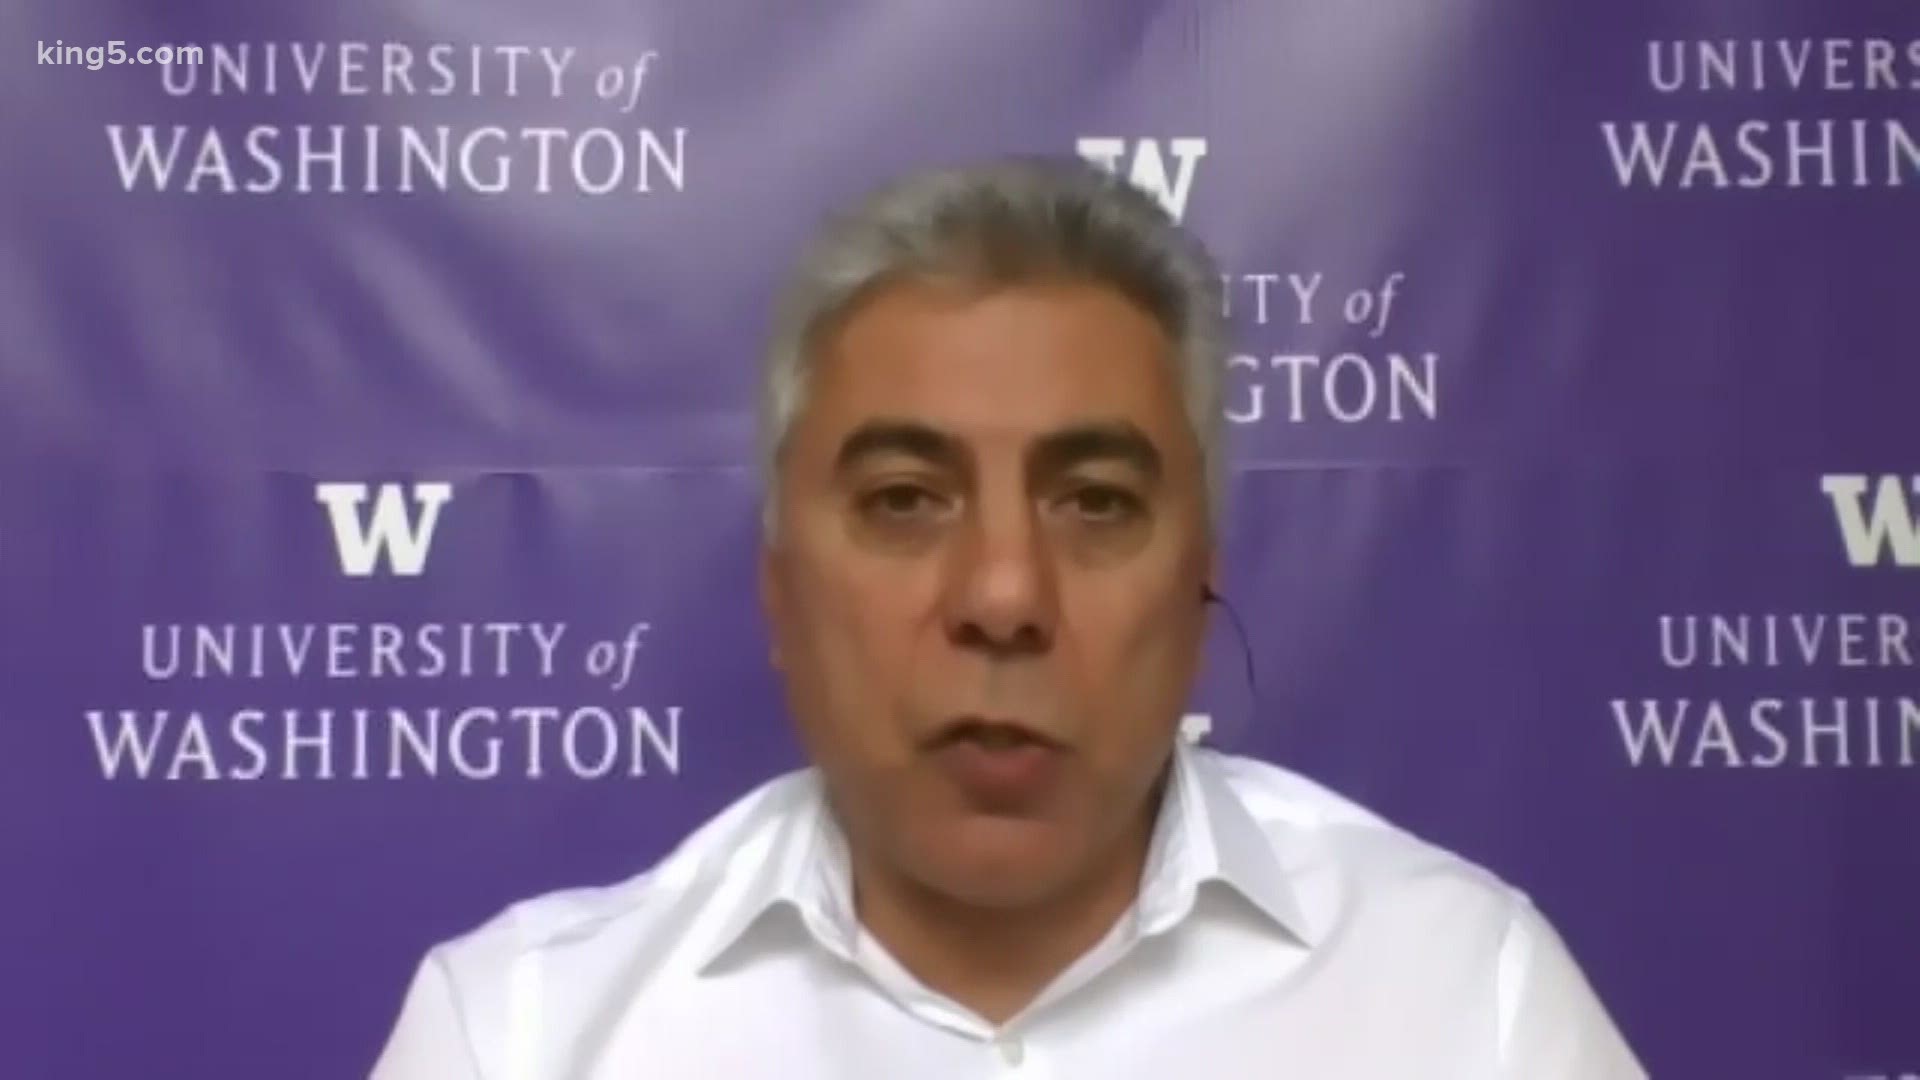 UW Dr. Ali Mokdad says racism is a public health issue.